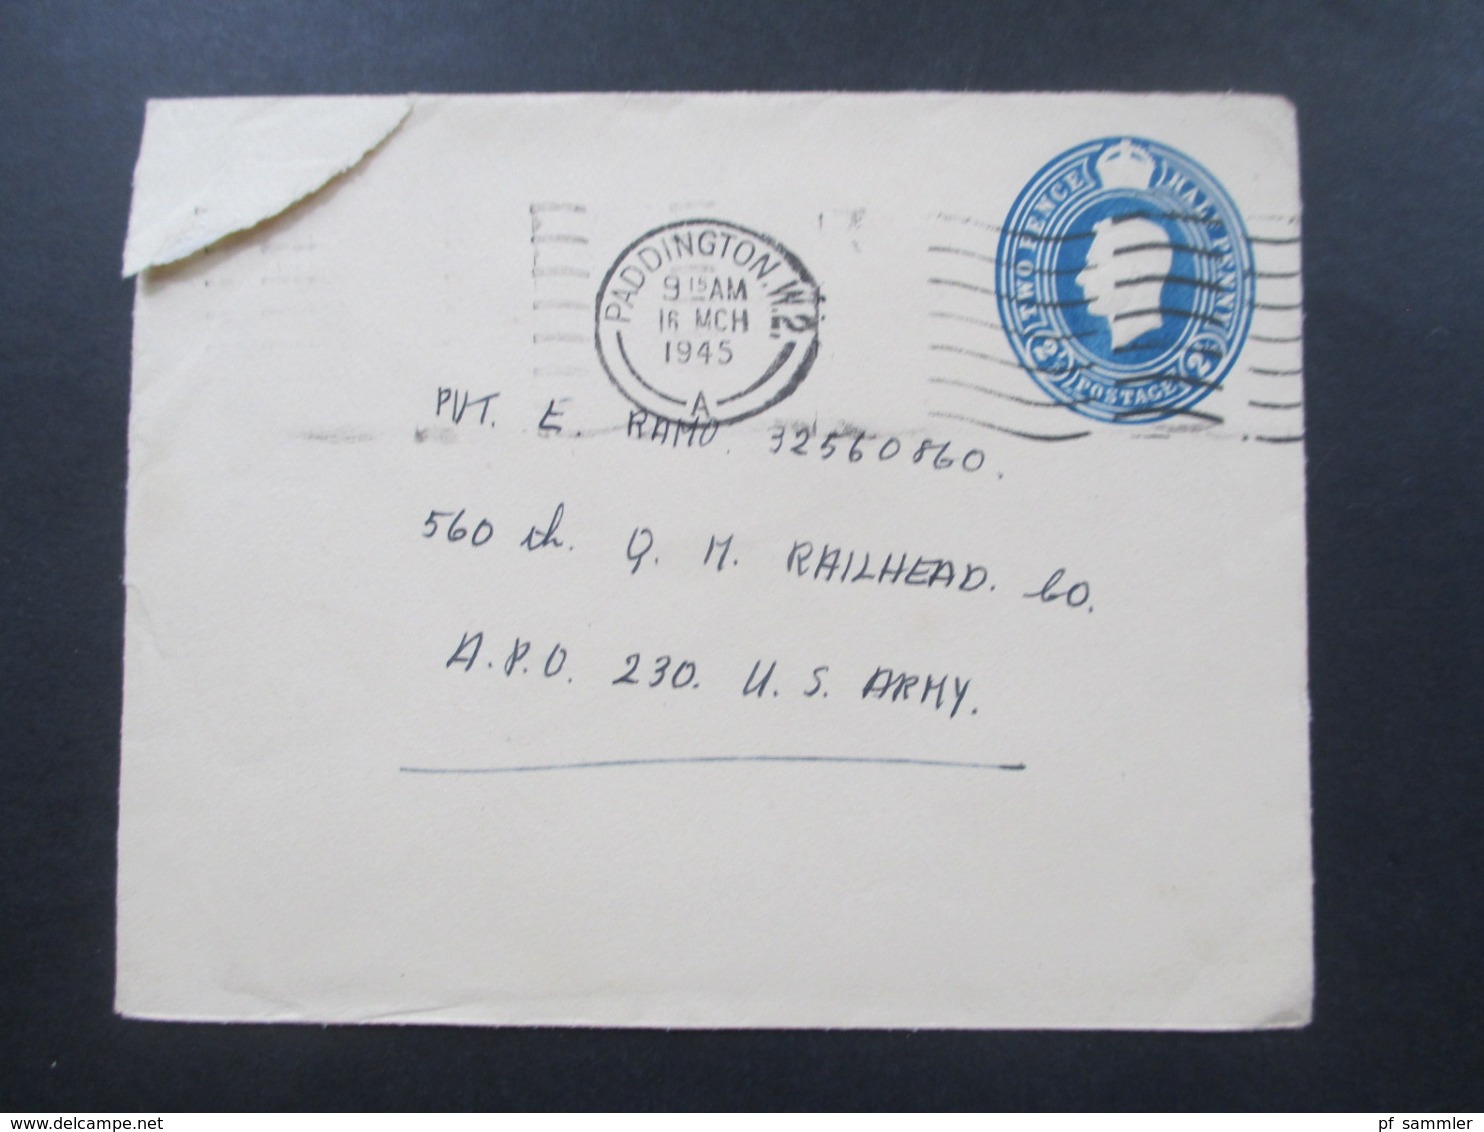 GB 16.3.1945 Die Letzten Kriegstage! GA Umschlag Paddington An Die US Army APO 230 Stempel US Army Postal Service - Lettres & Documents